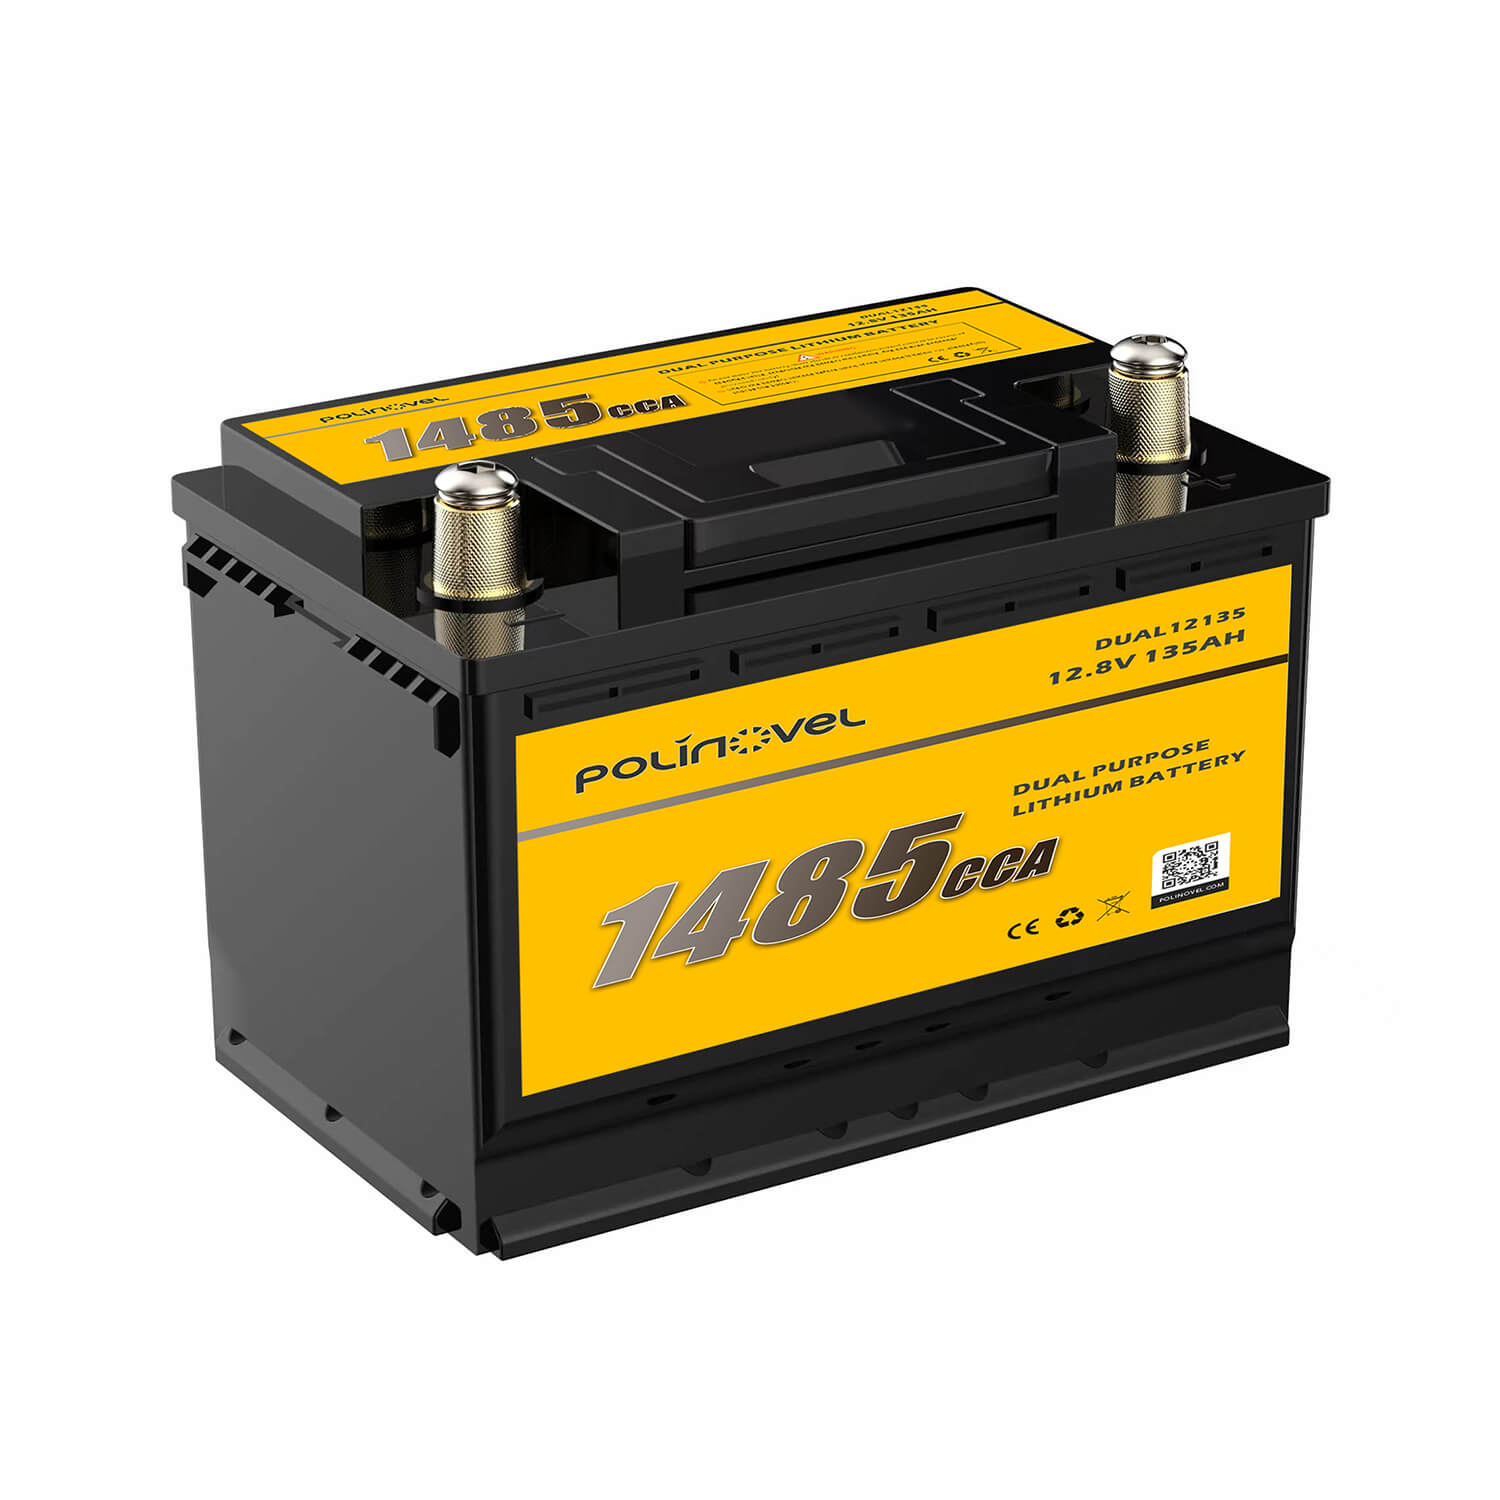 DUAL12135 Dual Purpose Lithium Battery